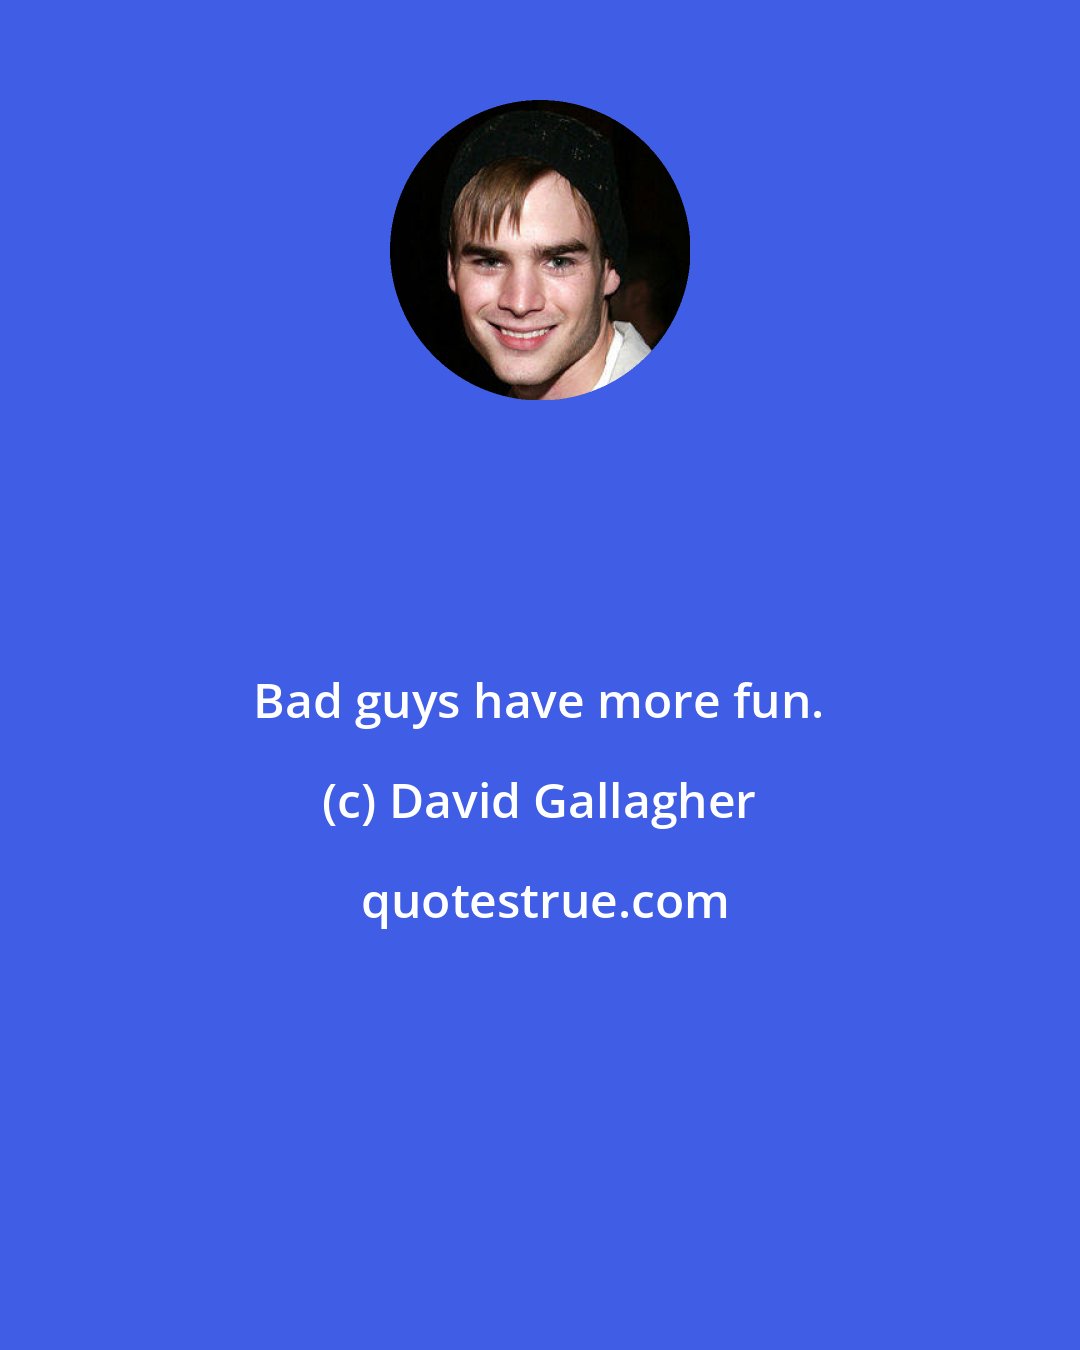 David Gallagher: Bad guys have more fun.